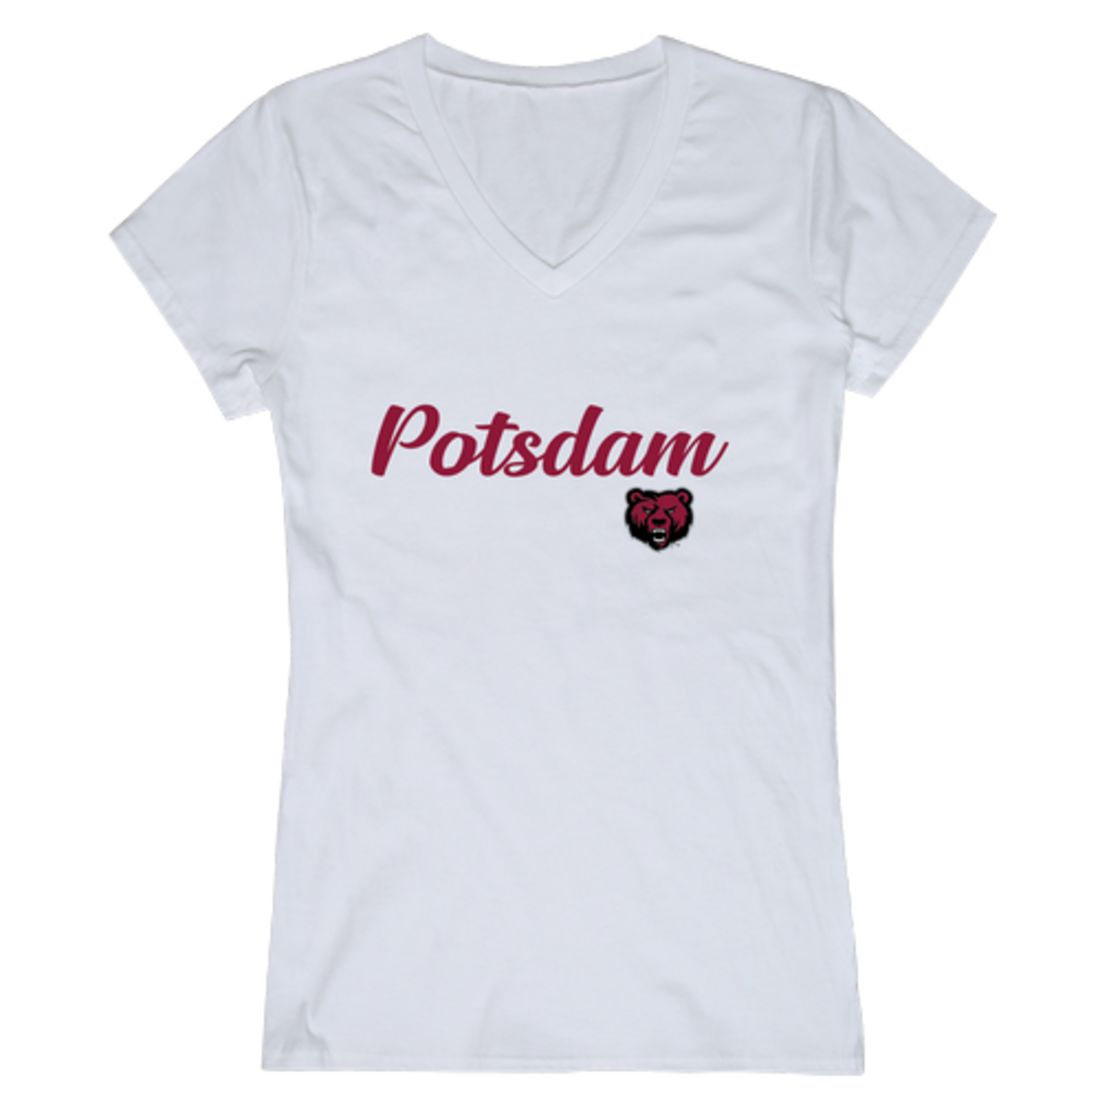 State University of New York at Potsdam Bears Womens Script T-Shirt Tee